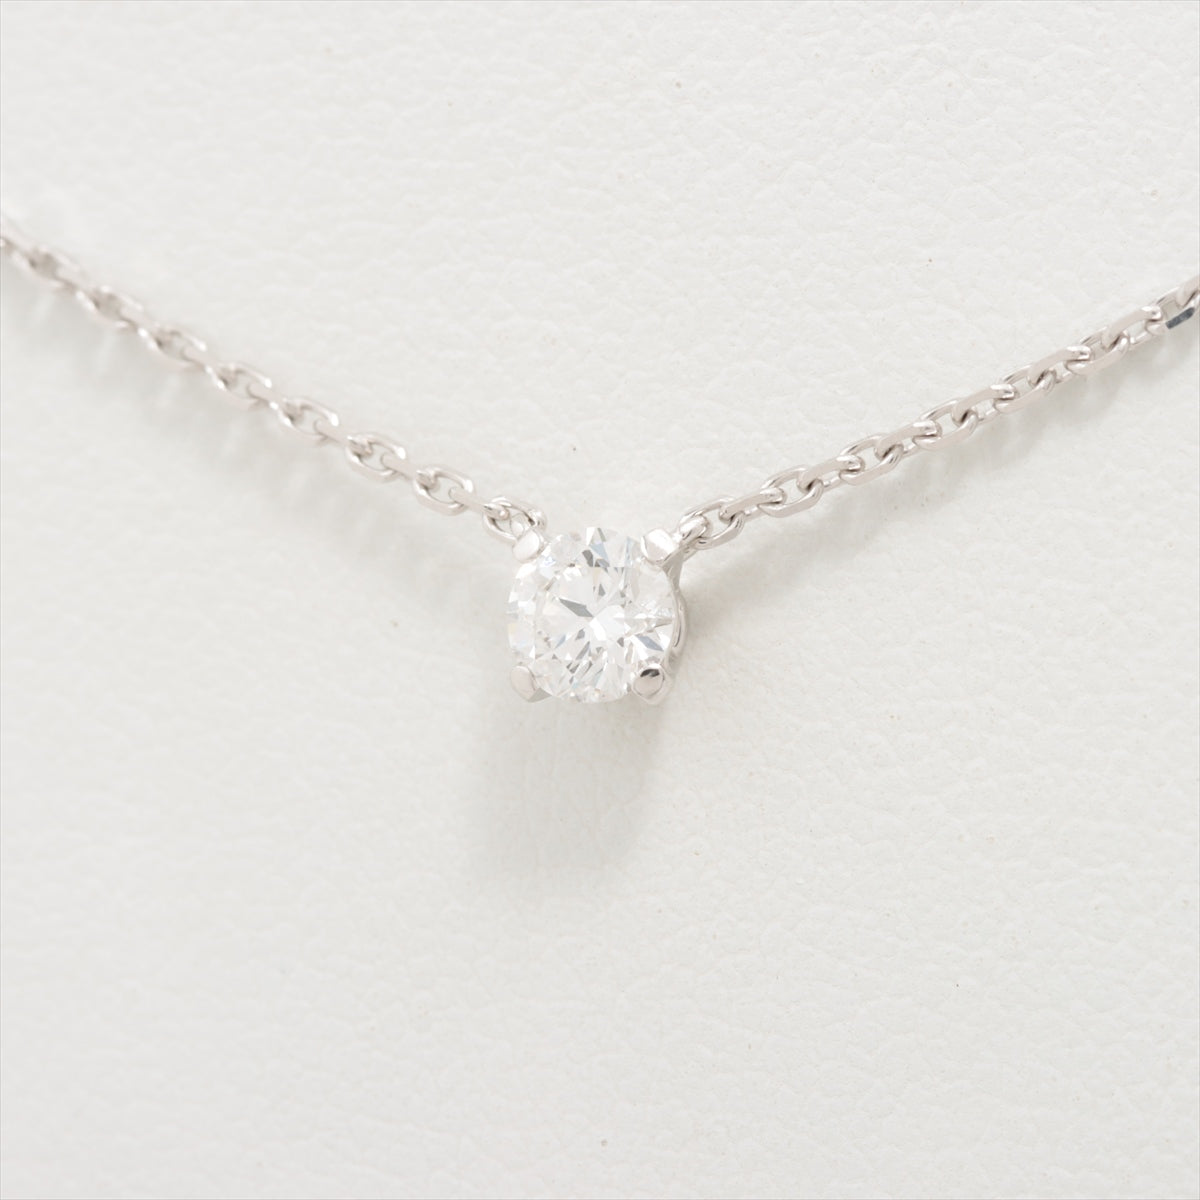 Cartier Love Support Diamond Necklace 750(WG) 2.4g 0.21 E VVS2 EX NONE